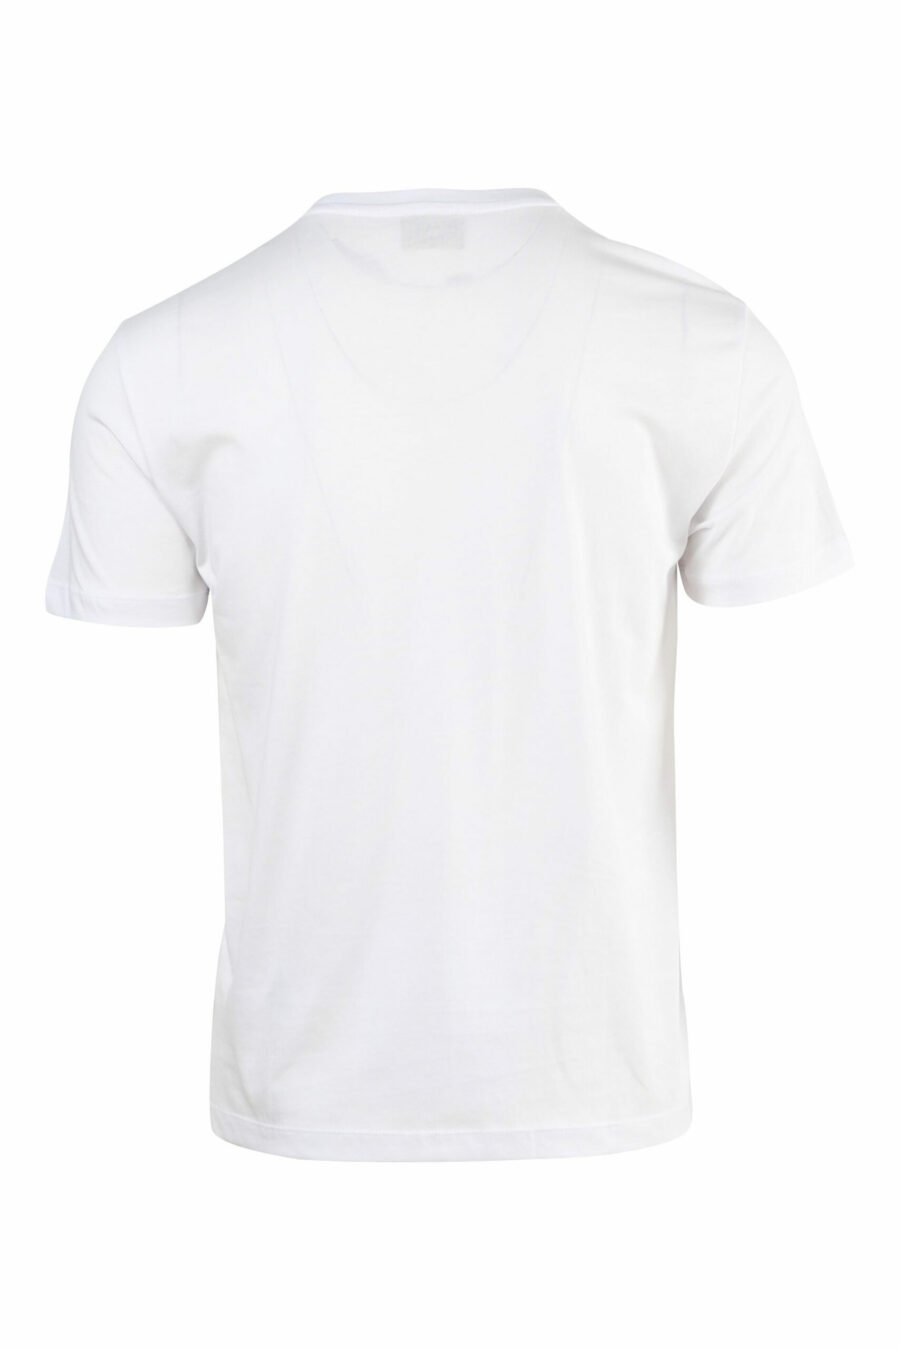 Camiseta blanca con minilogo etiqueta "lux identity" dorado - 8057767515720 scaled